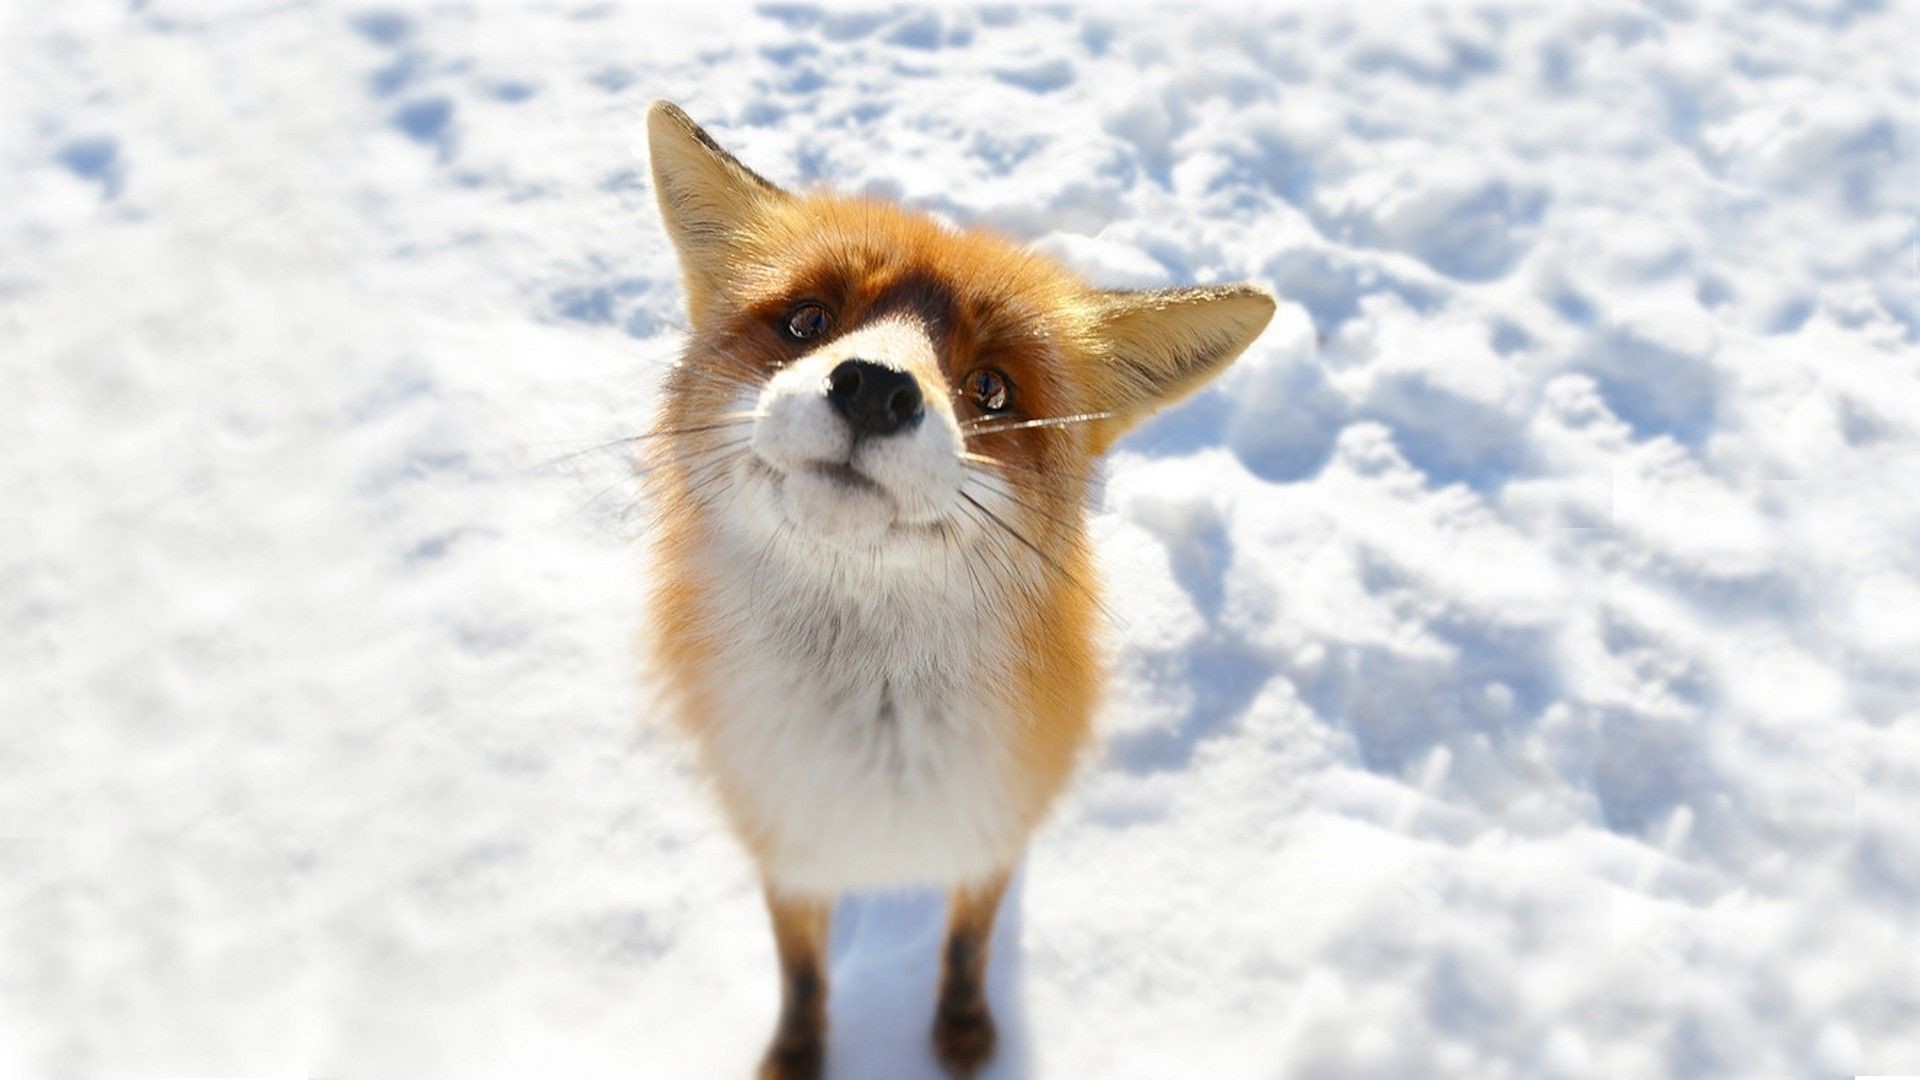 1920x1080 Free winter animal wallpaper - Animal Foxes Snow Winter. Download